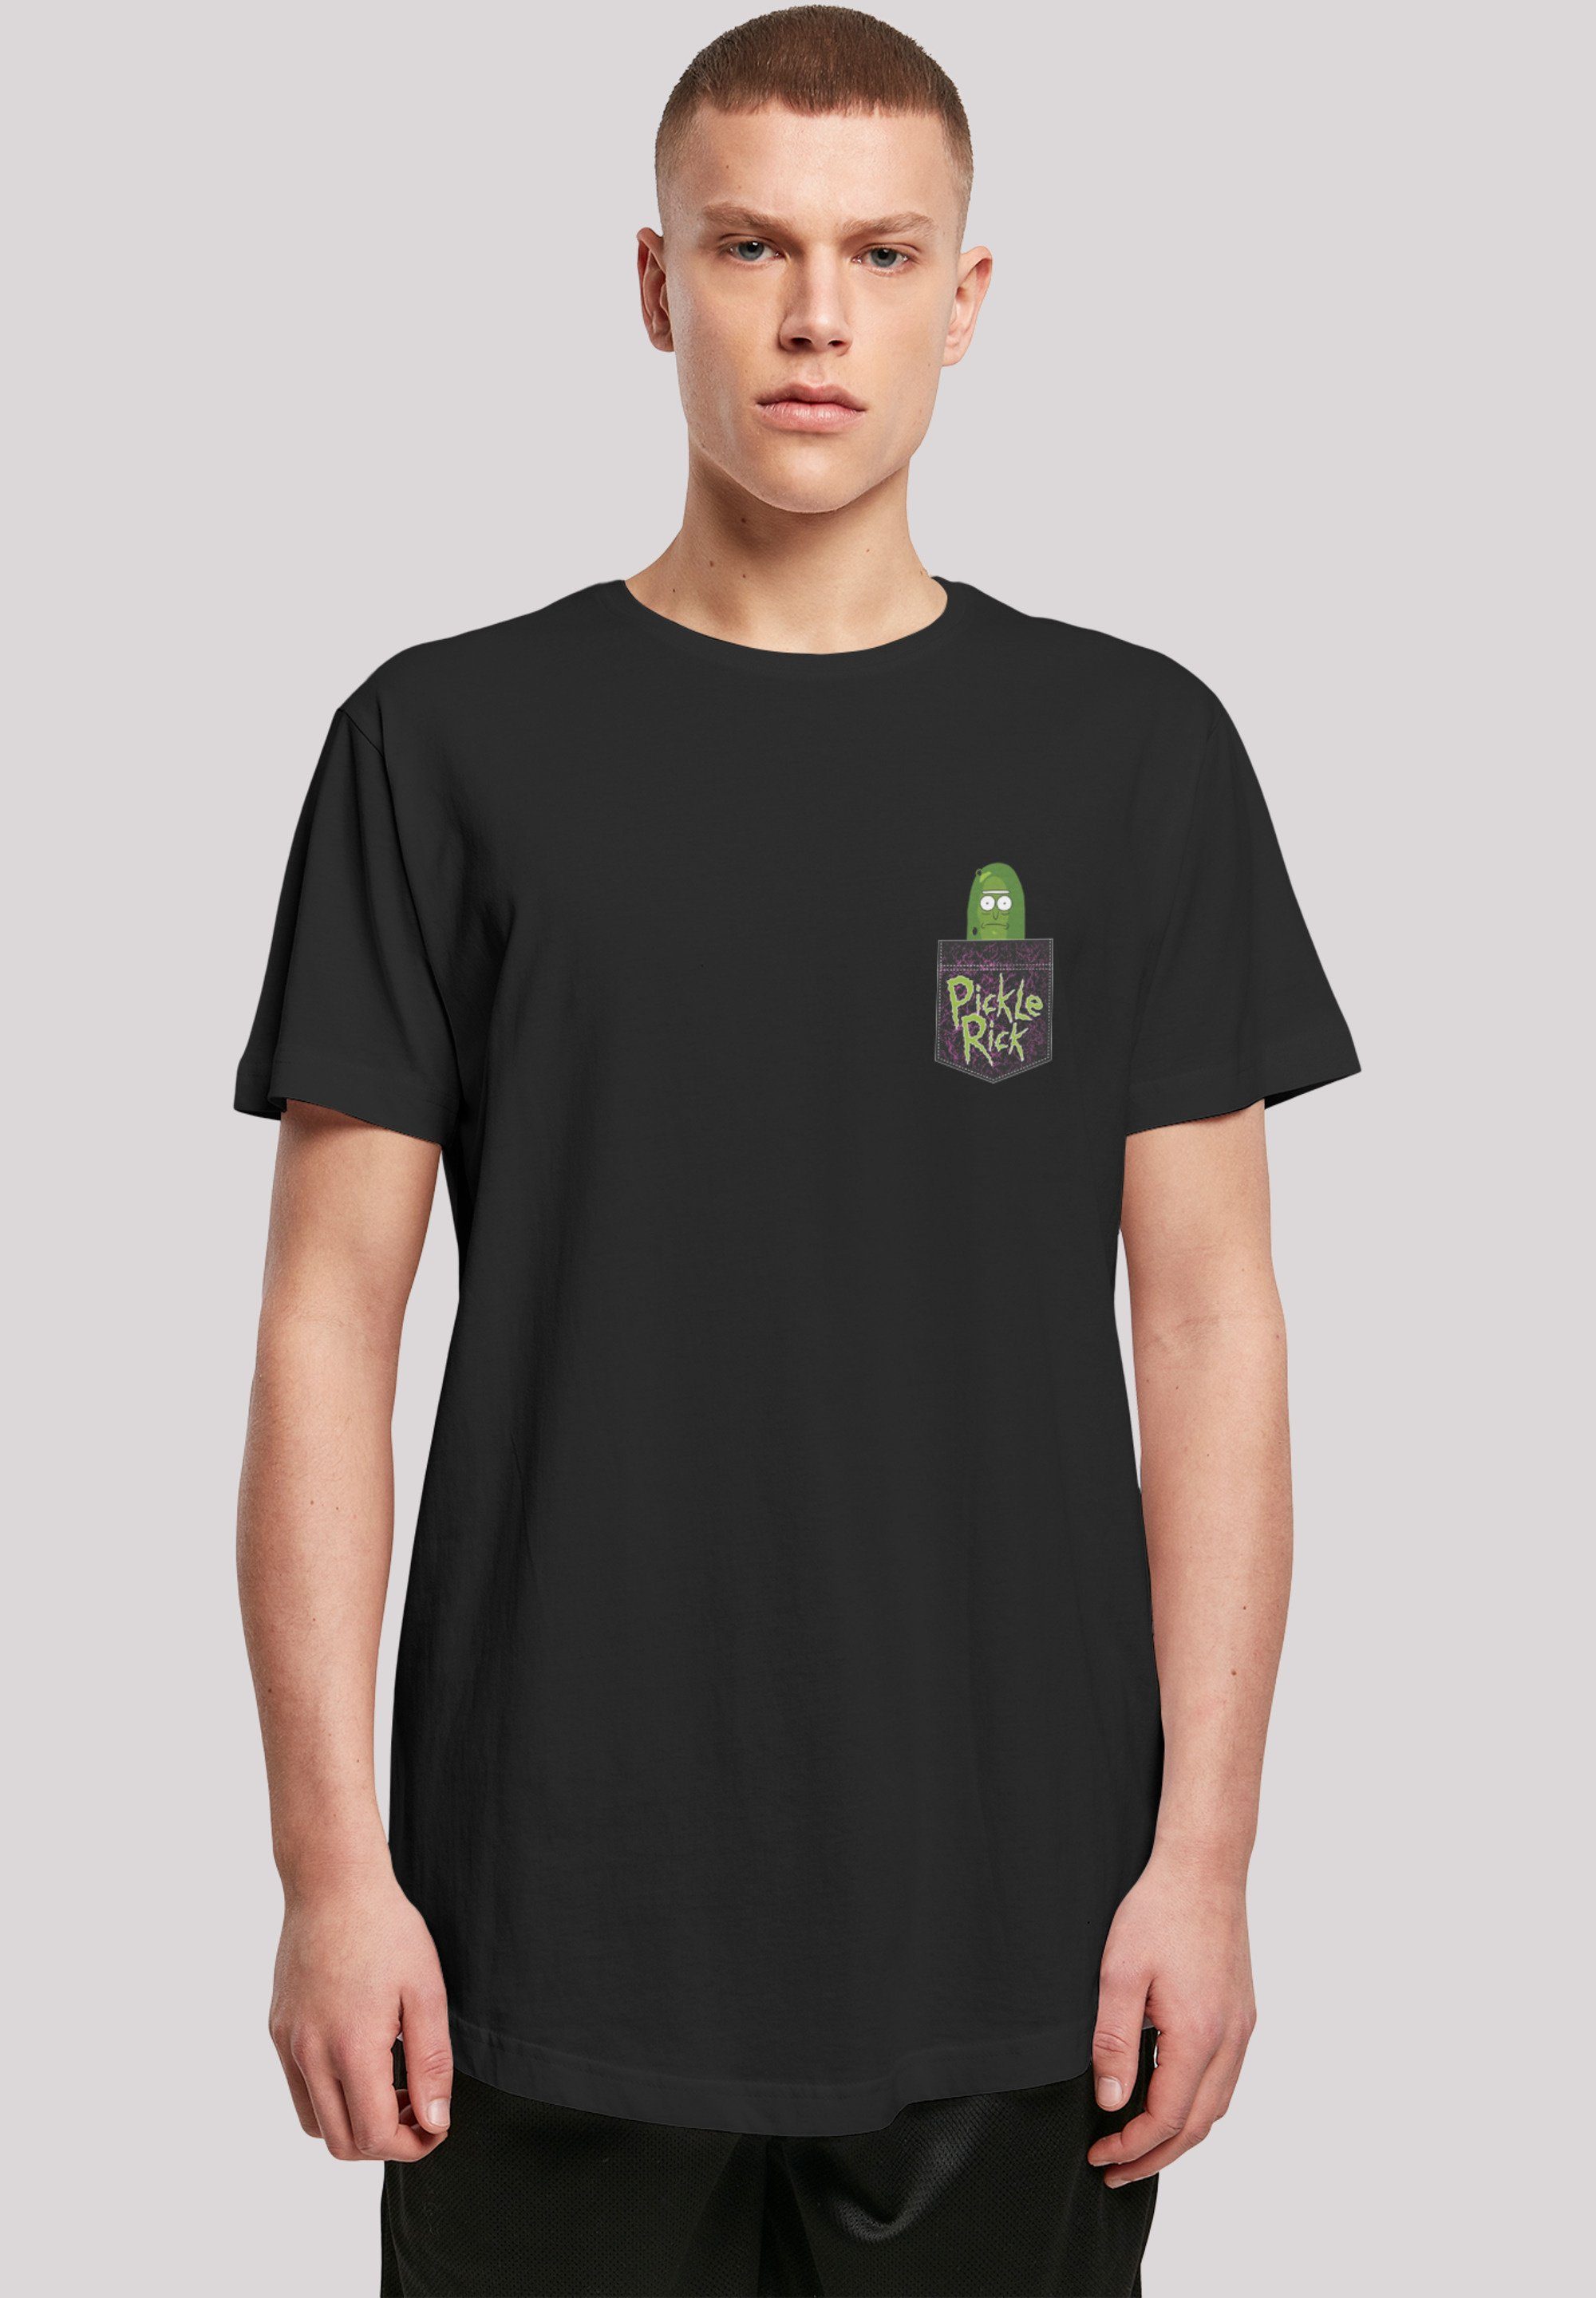 Rick Morty Rick schwarz F4NT4STIC and Pickle T-Shirt Print